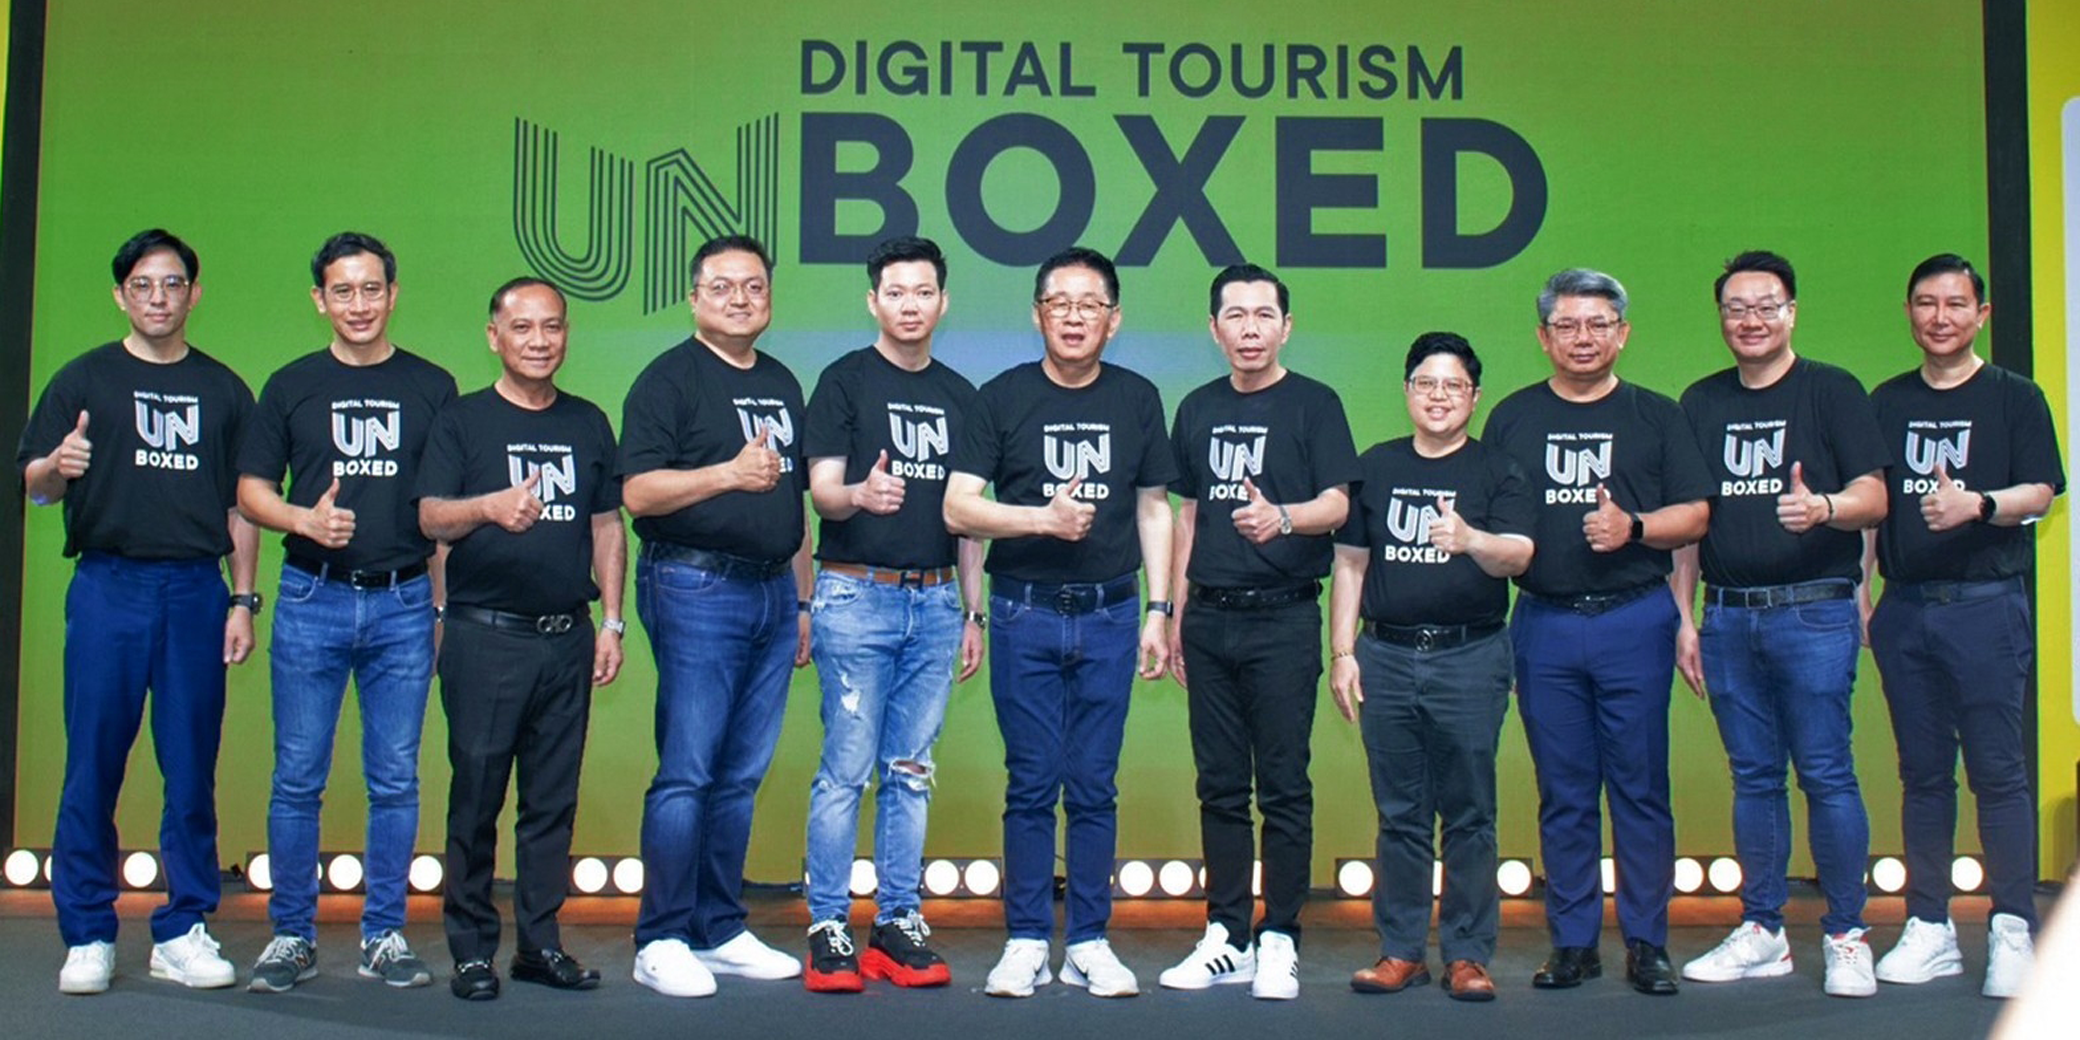 ThailandCONNEX ยกระดับผู้ประกอบการในภาคอุตสาหกรรมท่องเที่ยวไทยด้วยเทคโนโลยีดิจิทัลเพื่อเชื่อมต่อโอกาสทางธุรกิจ พร้อมเปิดตัว ThailandCONNEX TOKEN กระตุ้นการใช้จ่าย